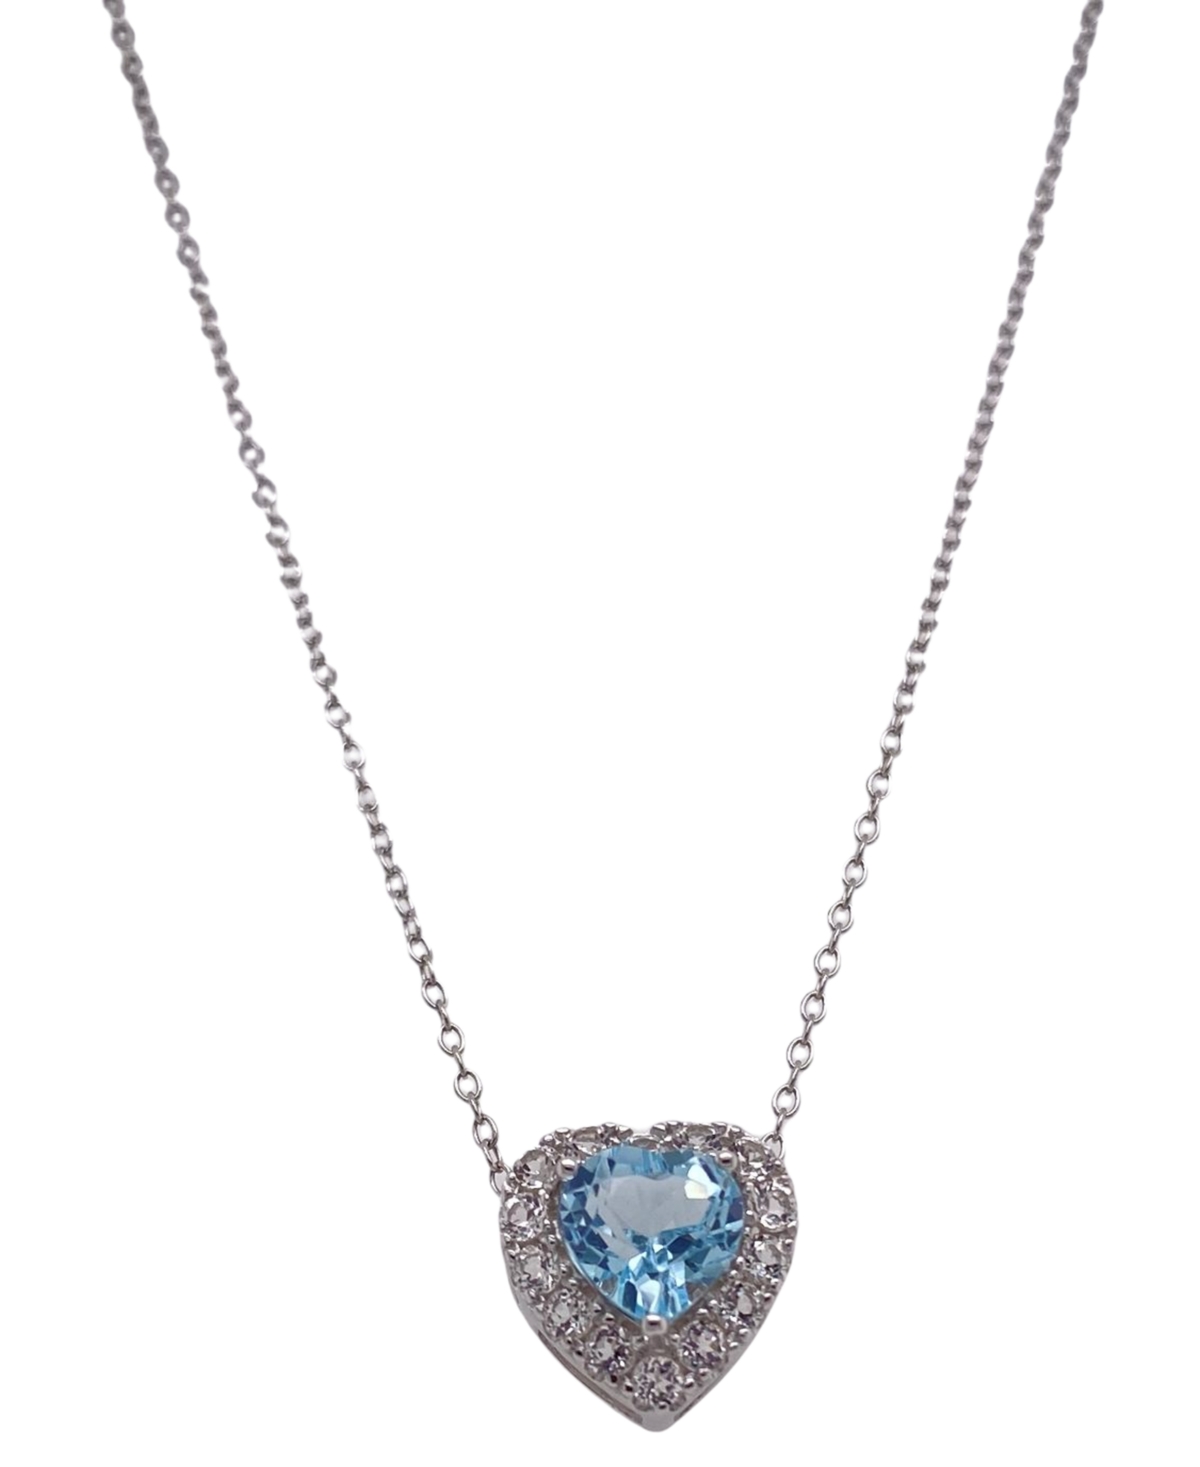 Macy's Garnet (1 ct. t.w.) & White Topaz (1-3/8 ct. t.w.) Heart 18" Pendant Necklace in Sterling Silver (Also in Amethyst, Sky Blue Topaz, Citrine, & Peridot)